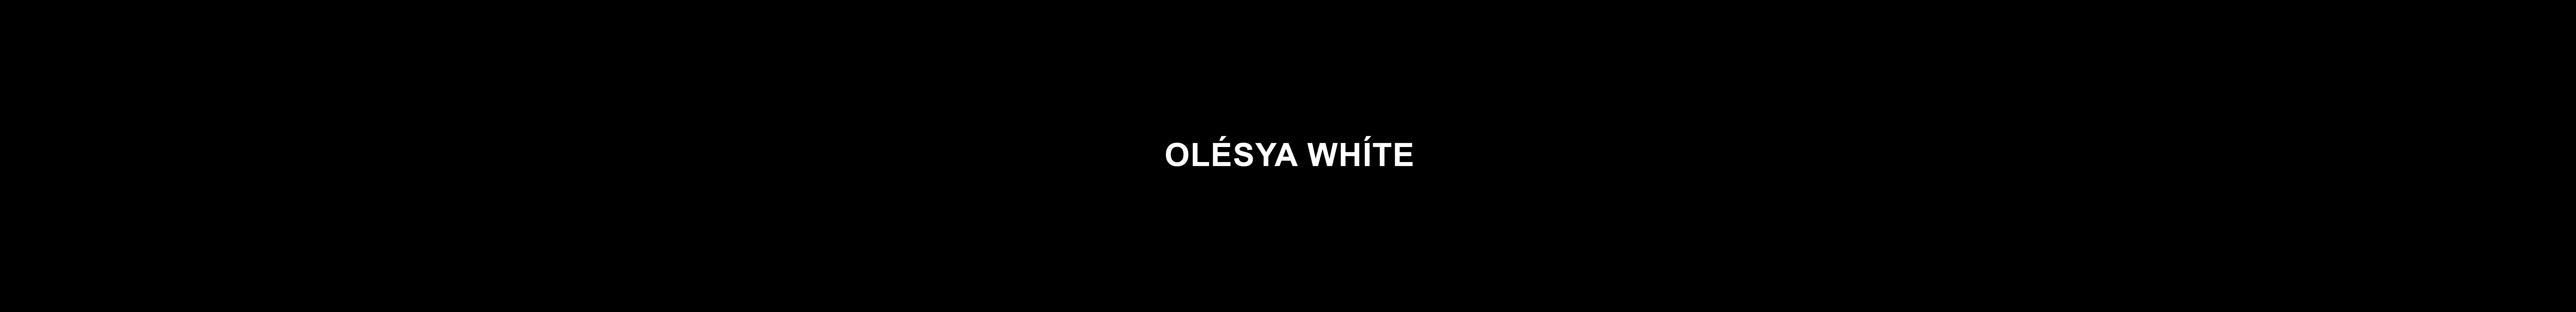 Olesya White のプロファイルバナー